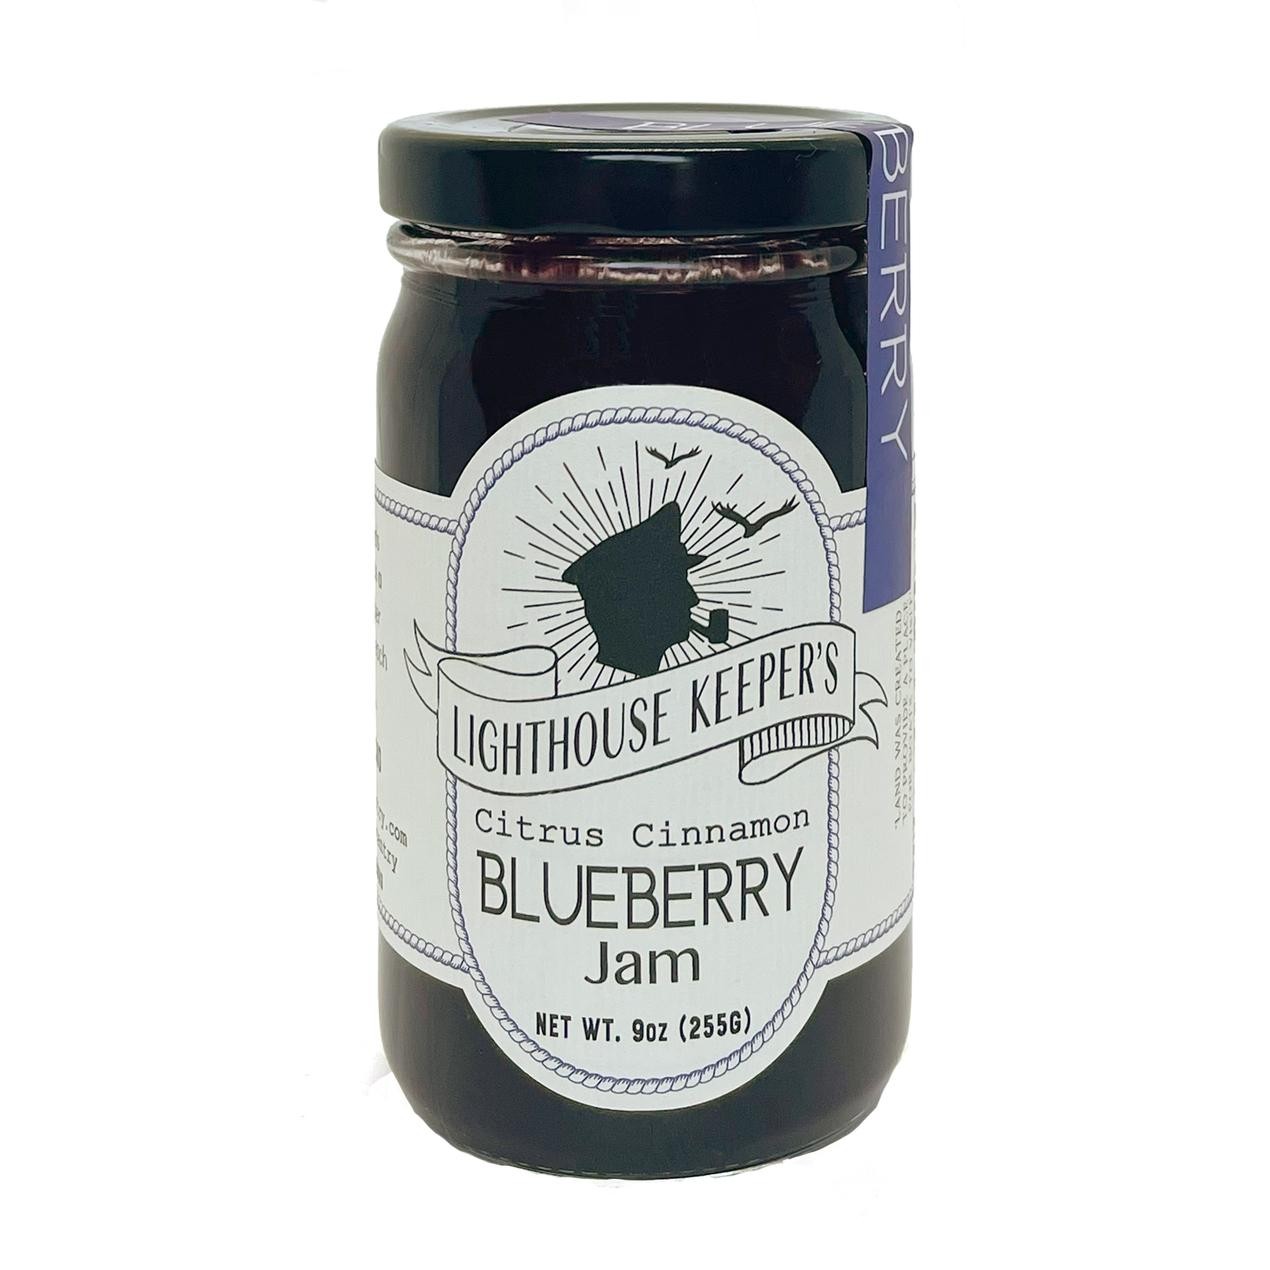 Lighthouse Keeper's - Citrus Cinnamon Blueberry Jam